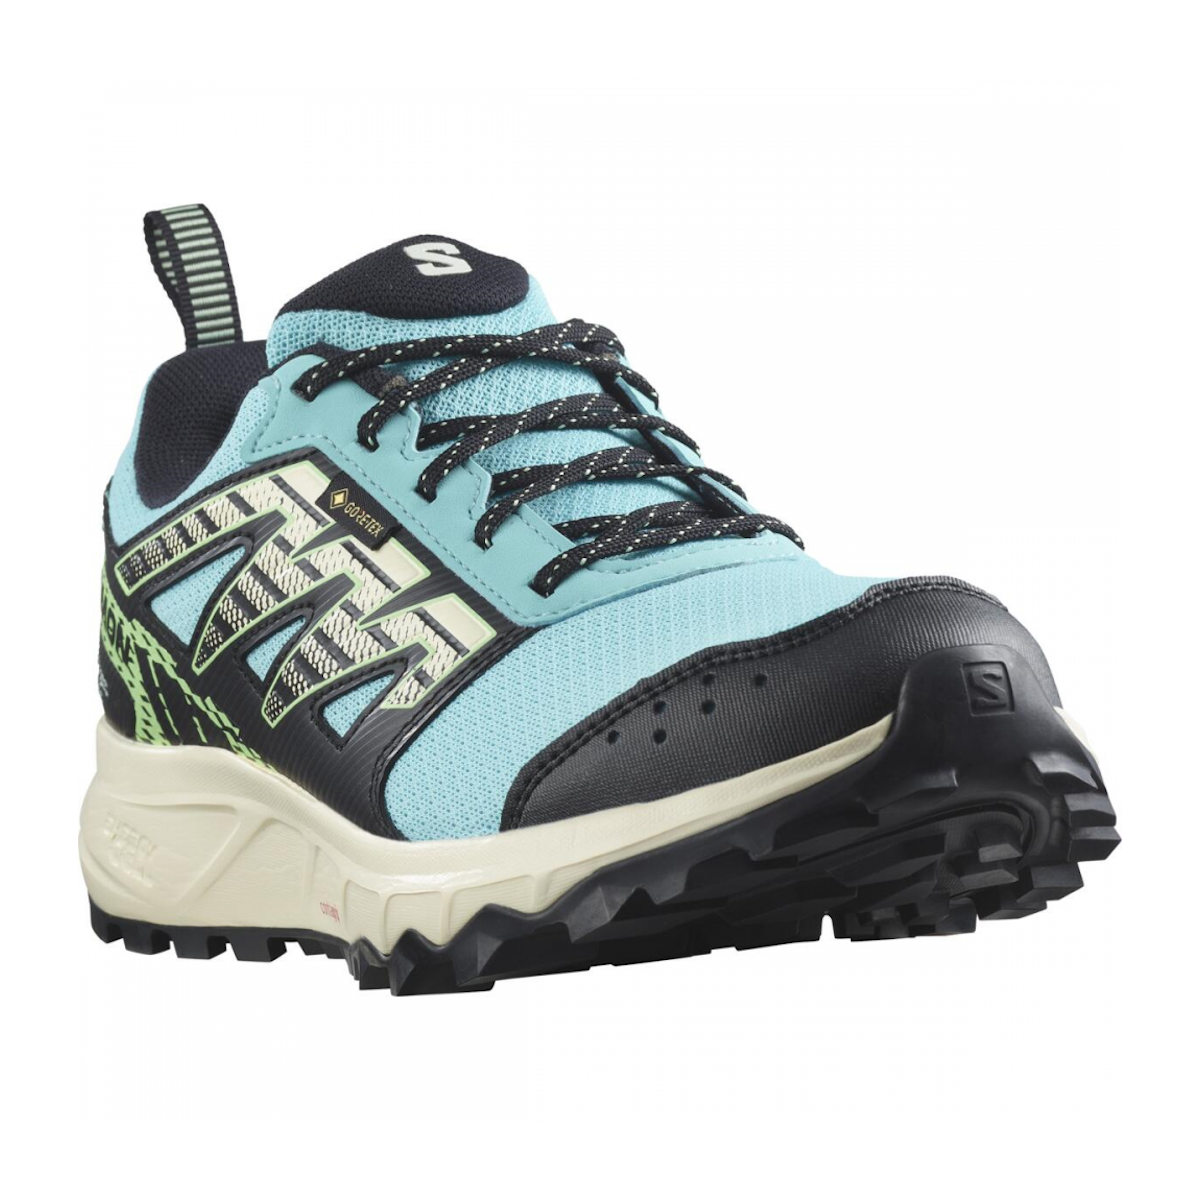 SALOMON WANDER GTX W trail running shoes - blue/green/black